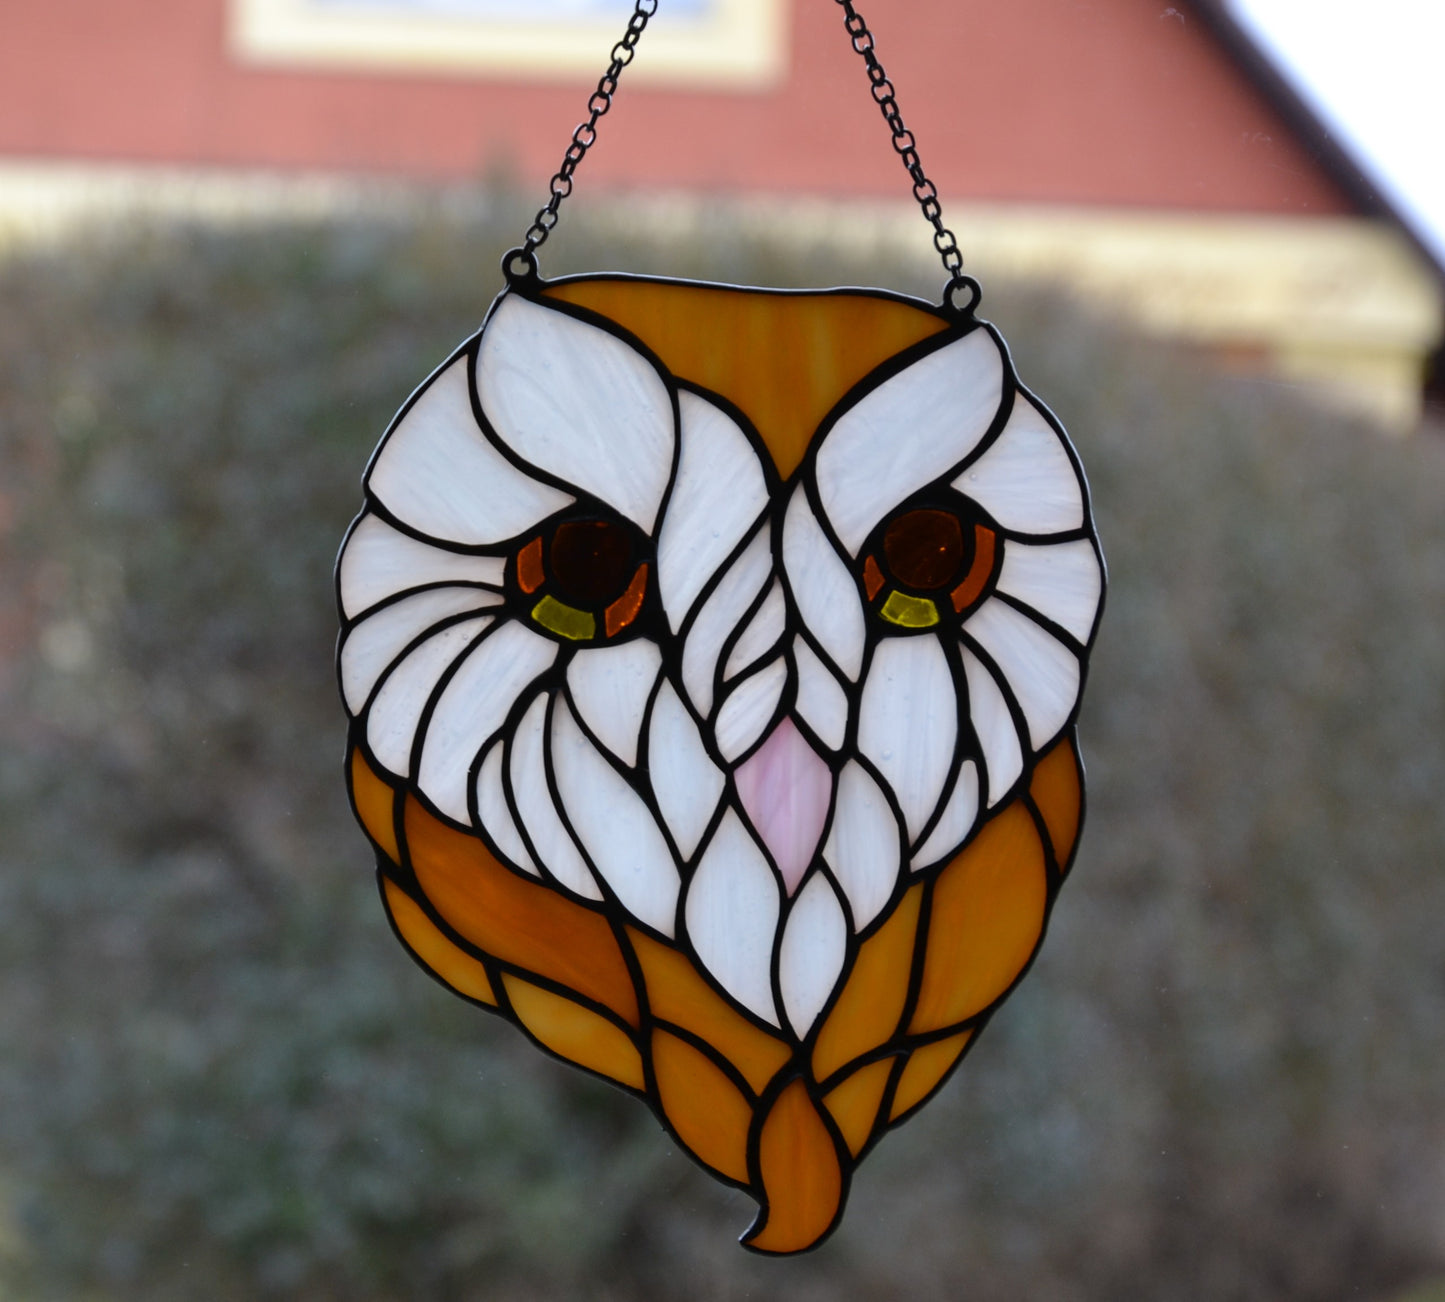 Owl stained glass window hangings sun catcher owl gift for boyfriend suncatcher for windows friendship gift glass art